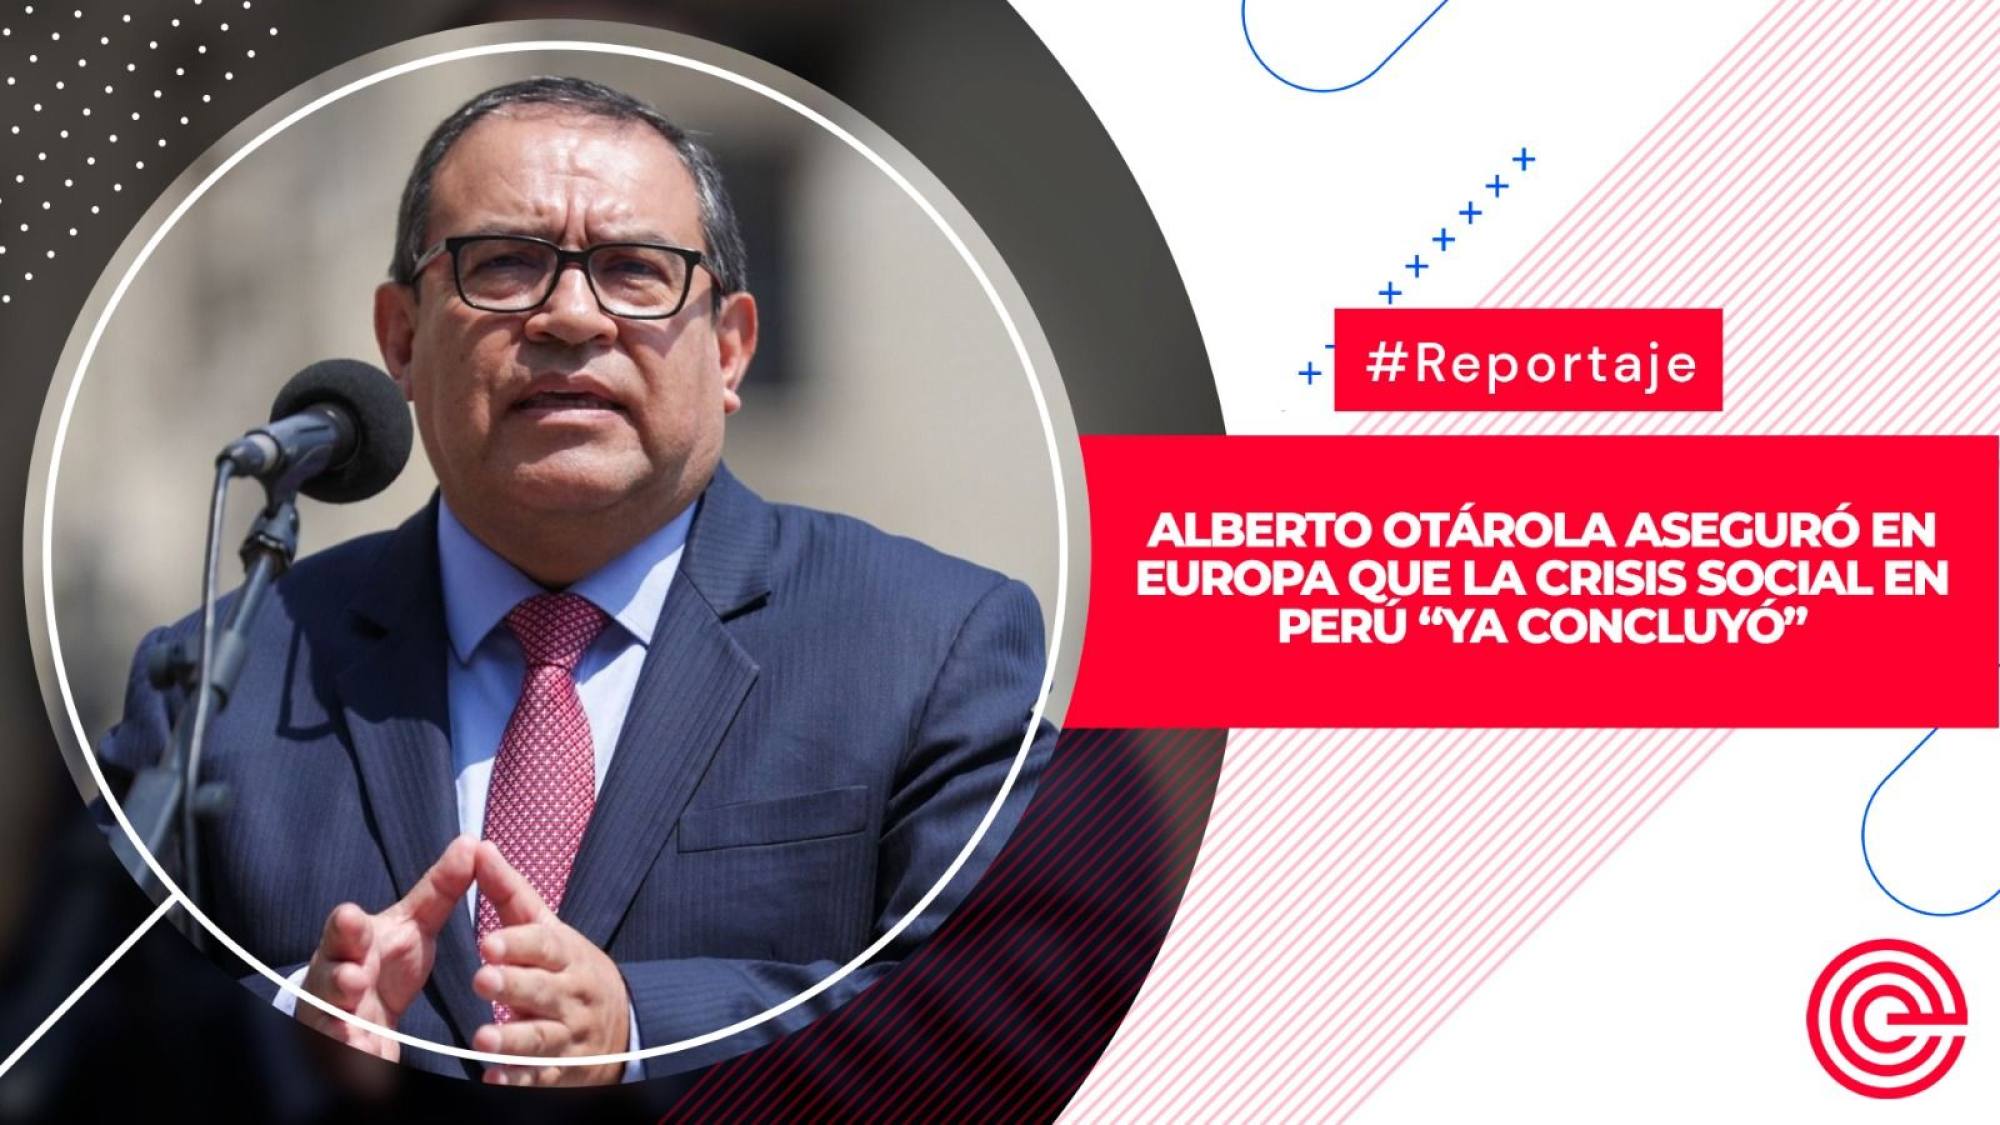 Alberto Otárola aseguró en Europa que la crisis social en Perú “ya concluyó”, Epicentro TV